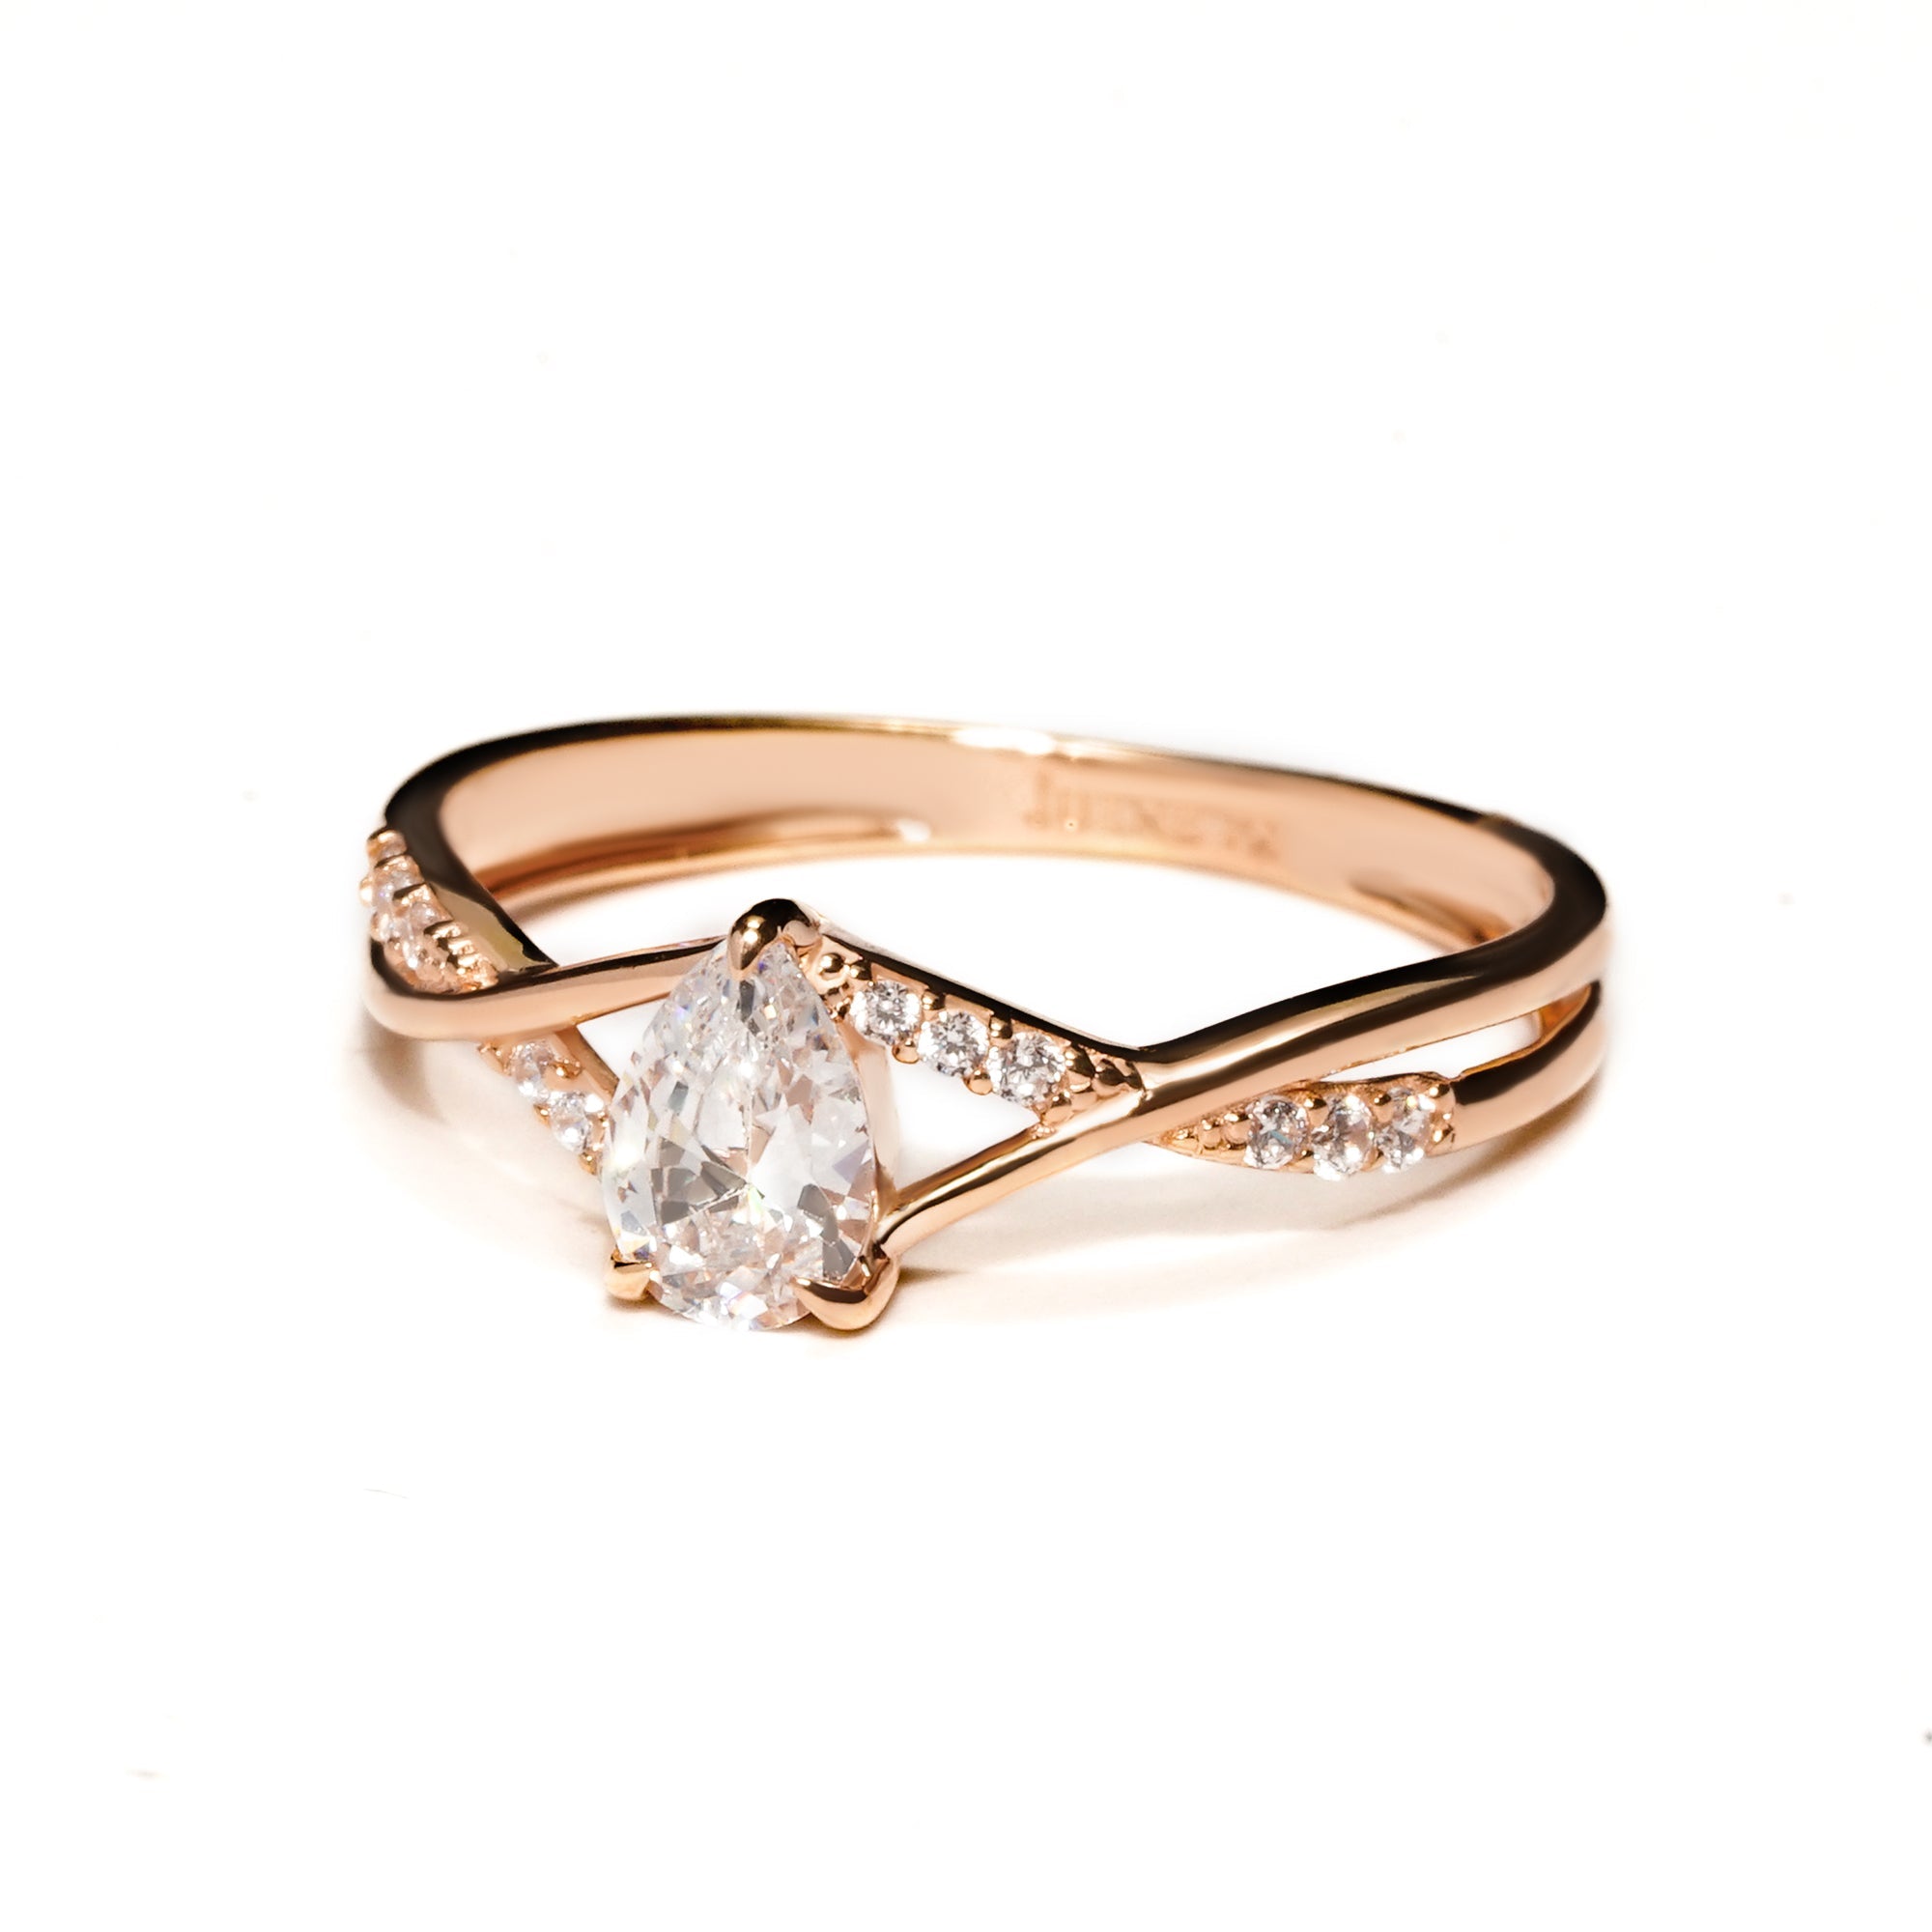 Farah Gold Ring - Serene Collection - Juene Jewelry